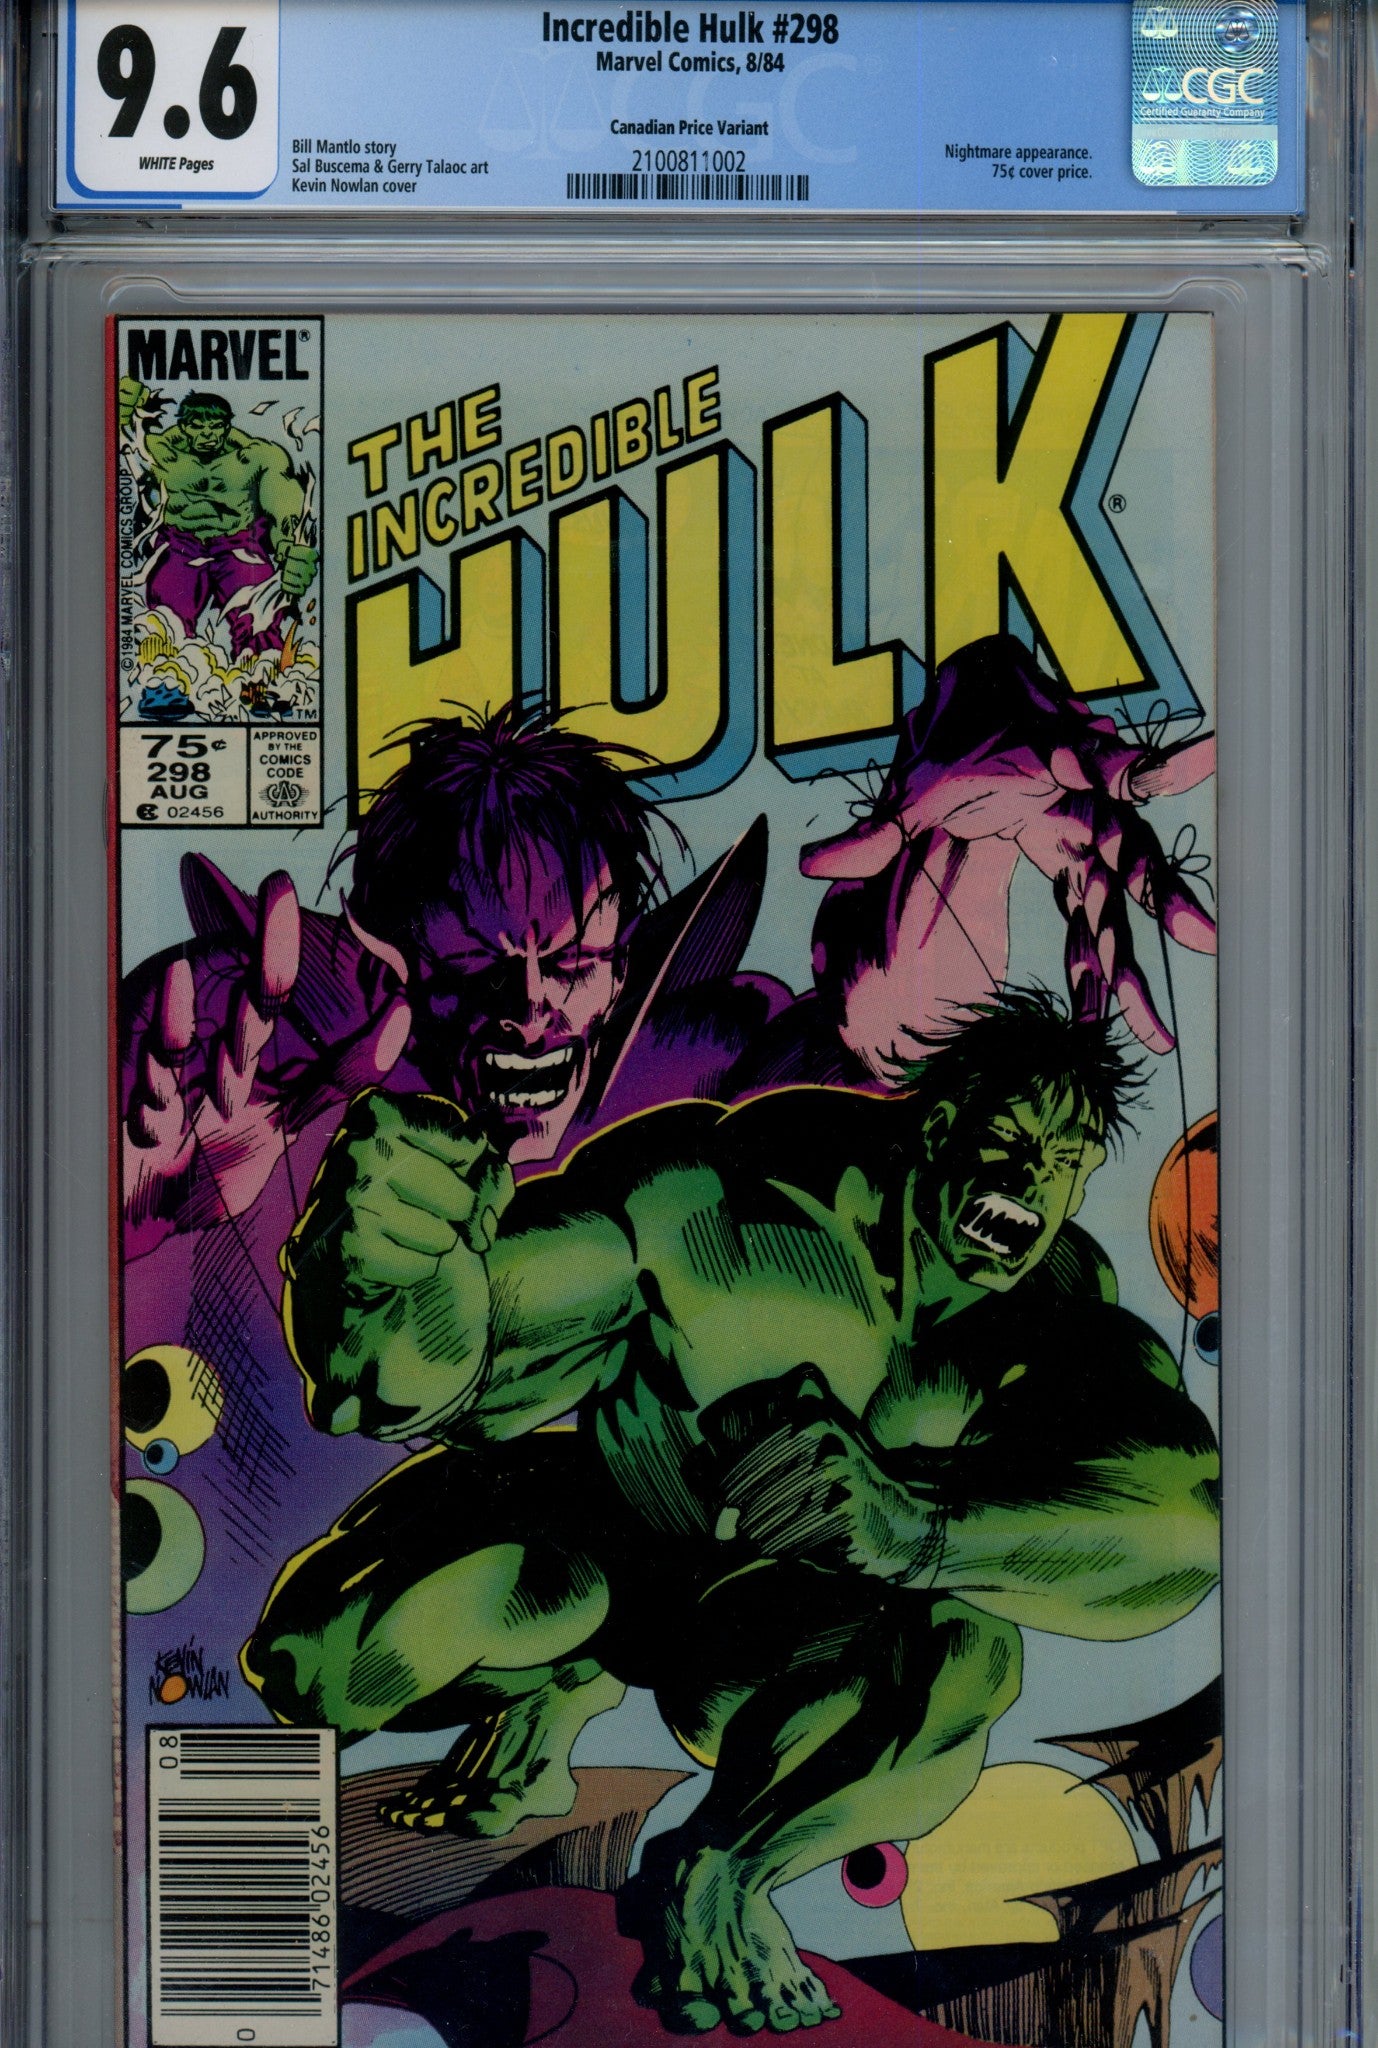 The Incredible Hulk Vol 1 298 Canadian Price Variant CGC 9.6 (1984)